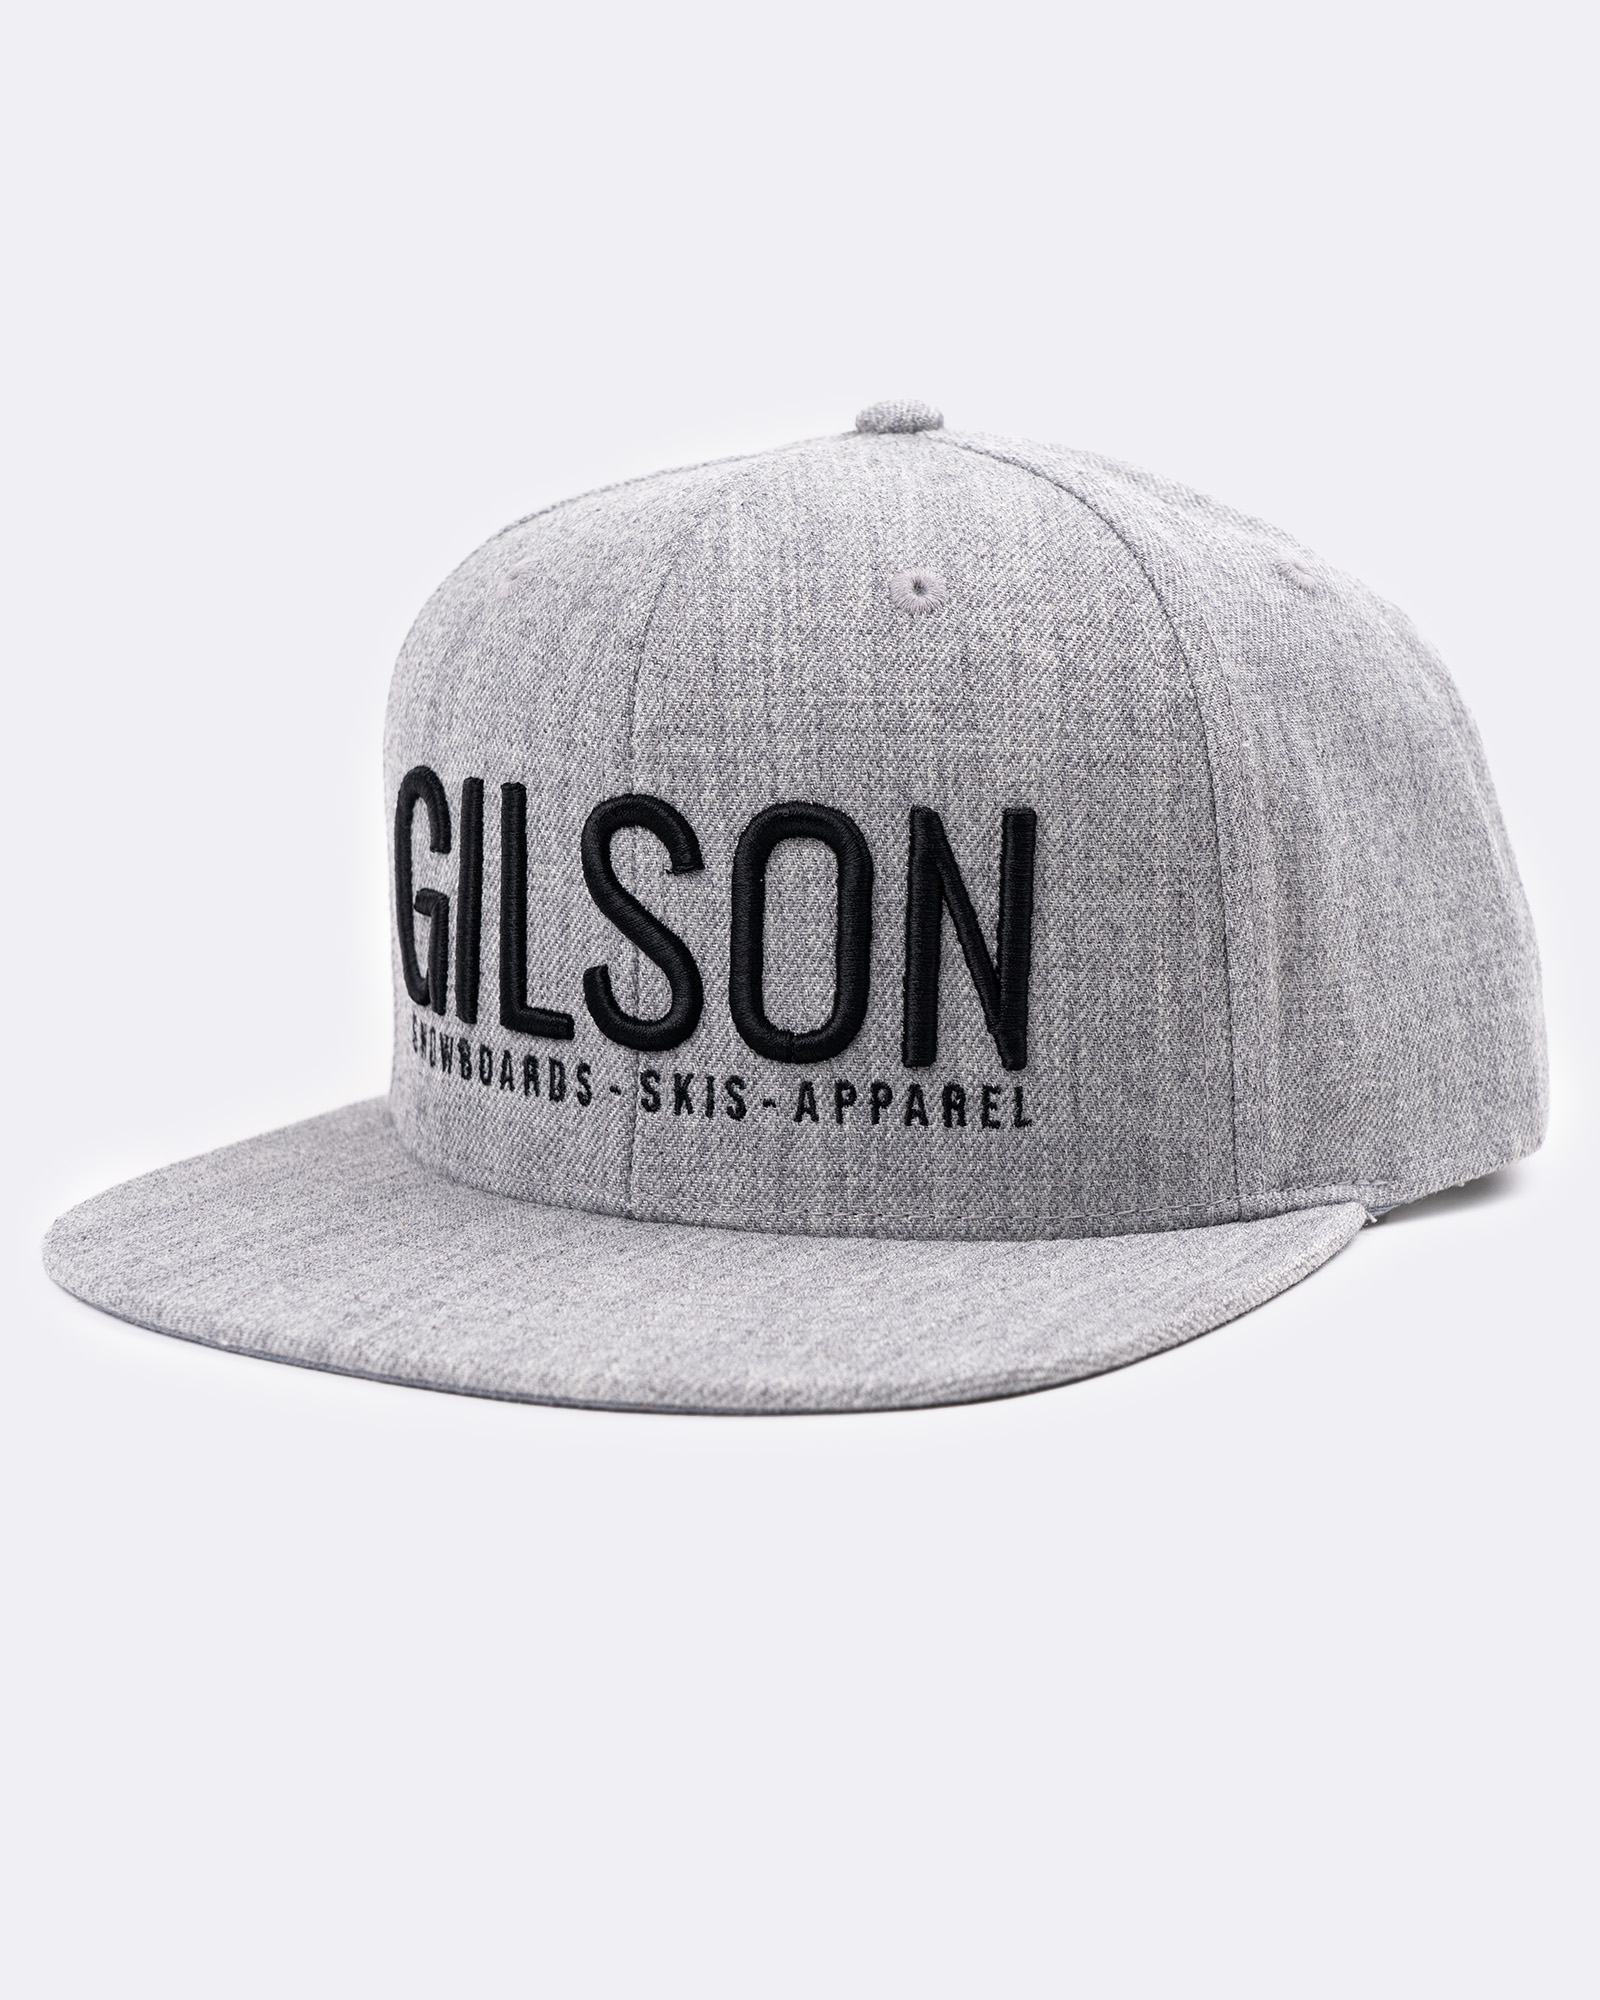 Gilson Flat Brim 
Snapback Gray graphics